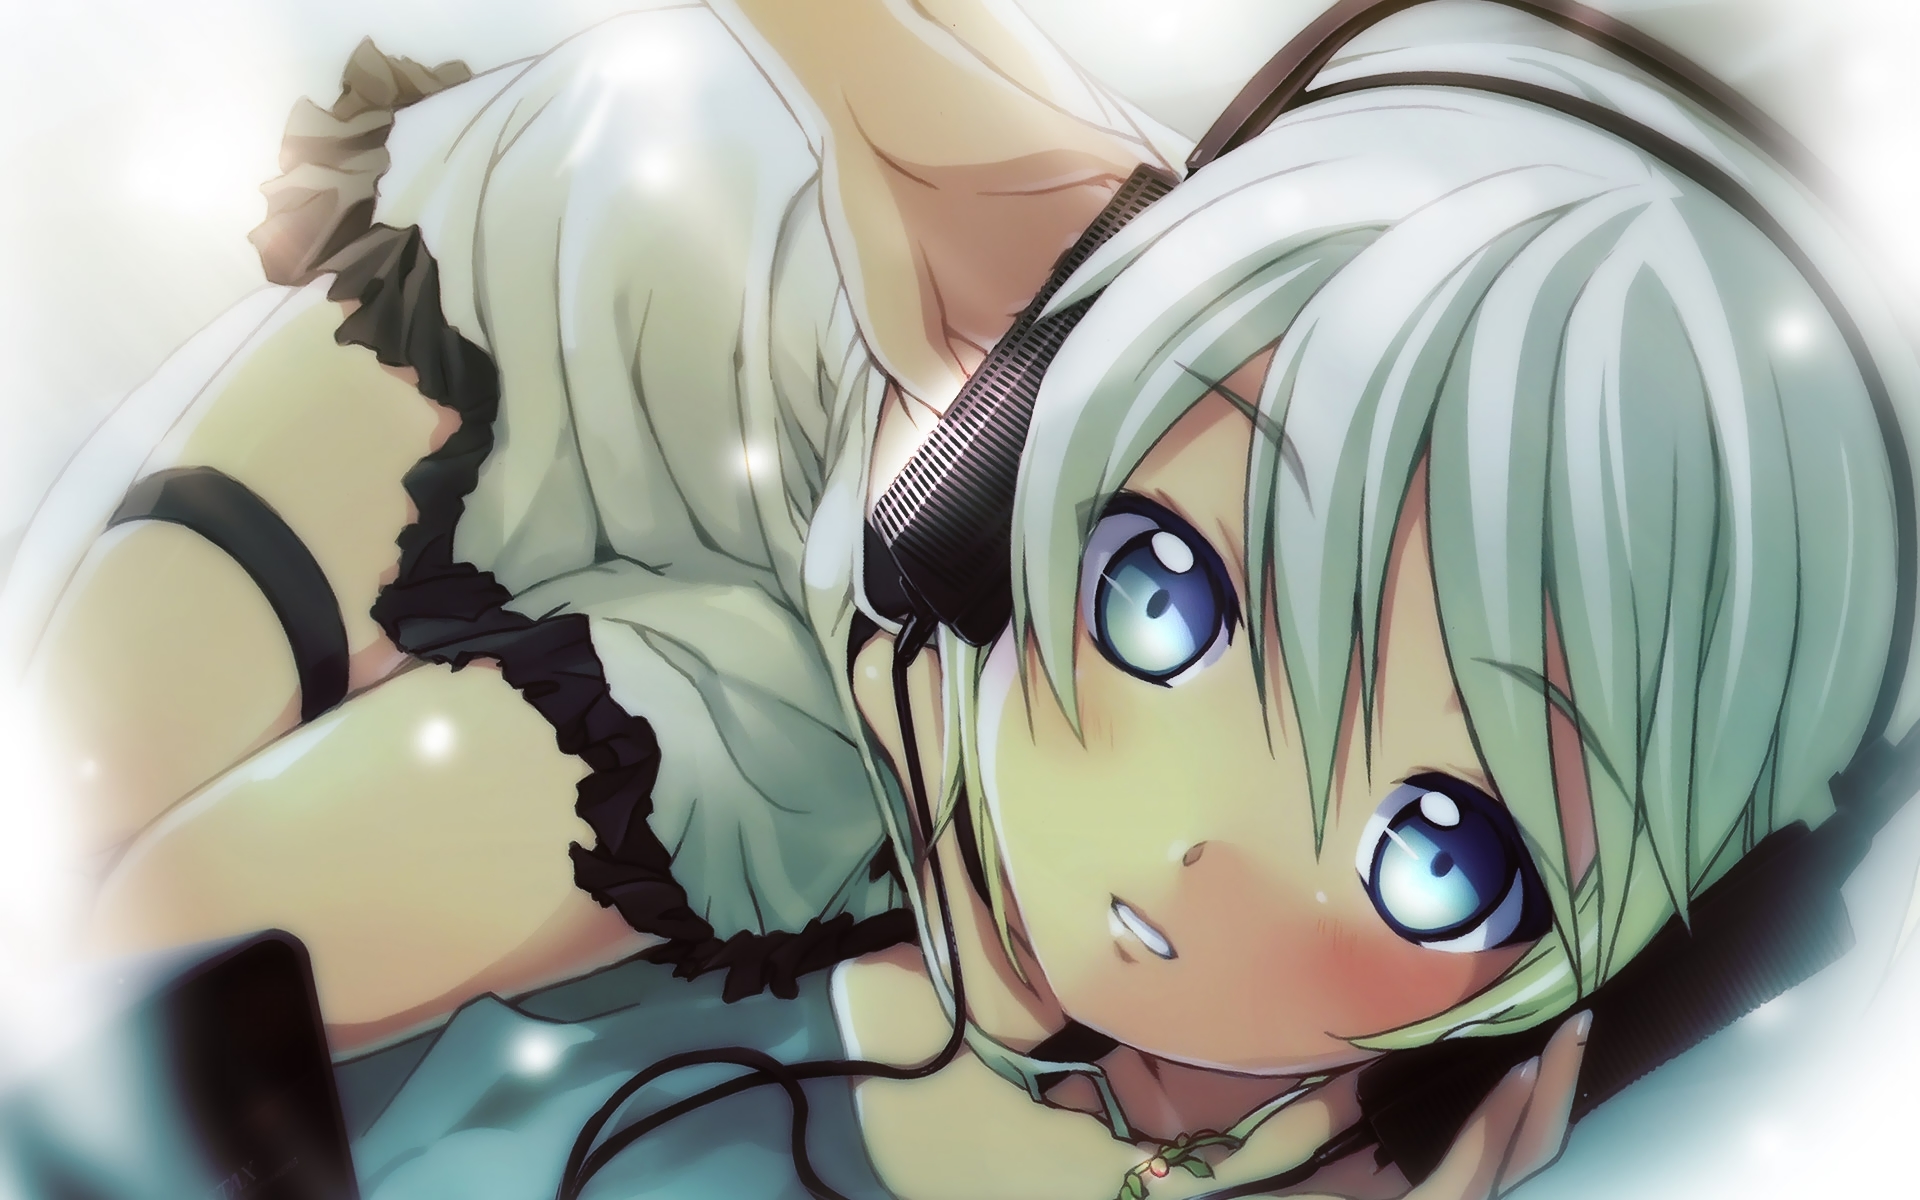 Anime girl wearing headphones with a vibrant desktop wallpaper background.